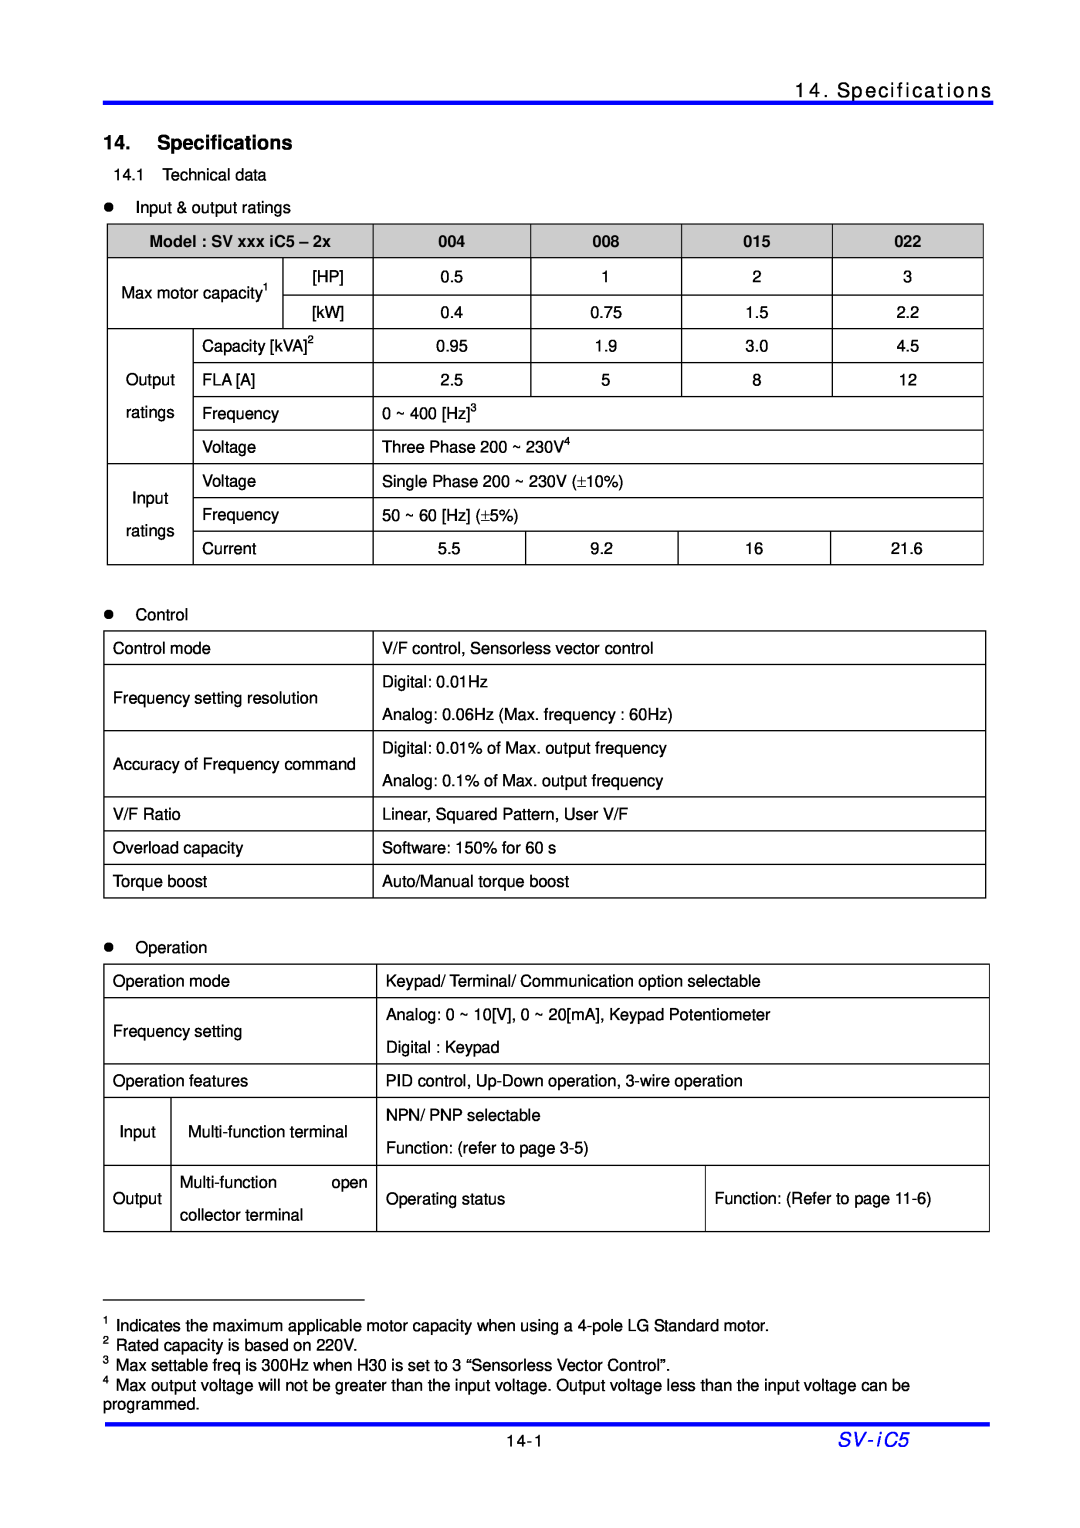 LG Electronics SV-iC5 Series manual Specifications, Model SV xxx iC5 